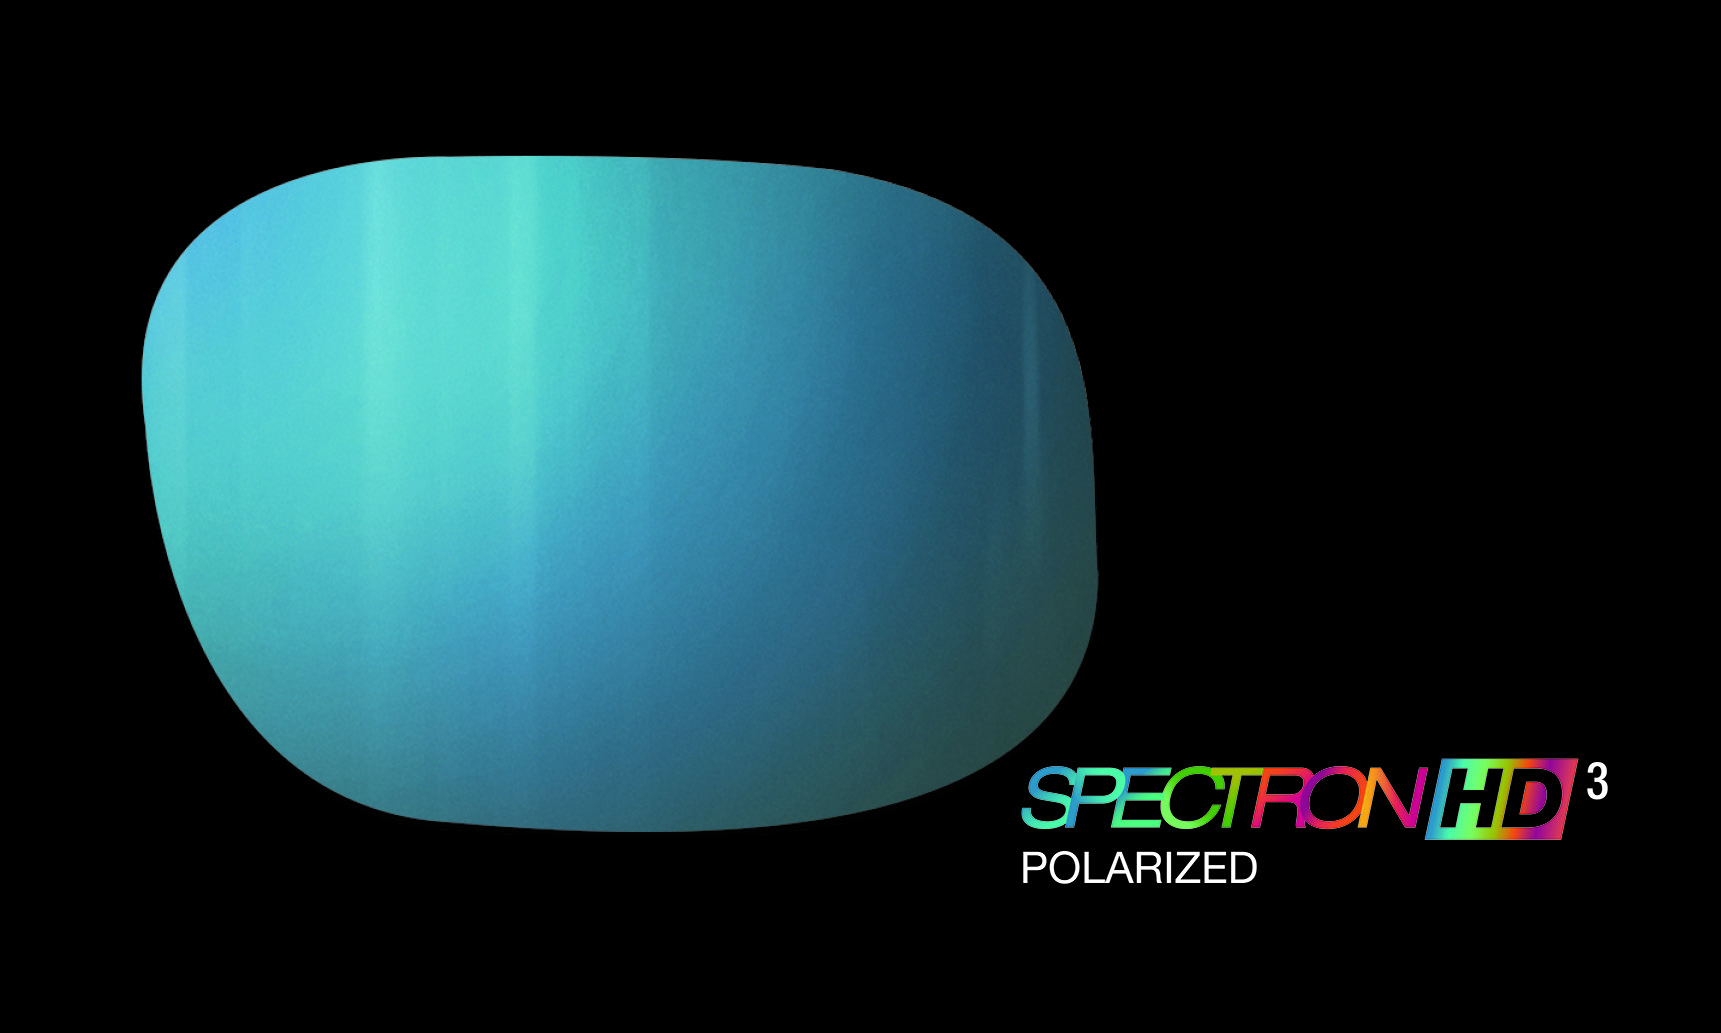 Spectron HD 3 Polarized